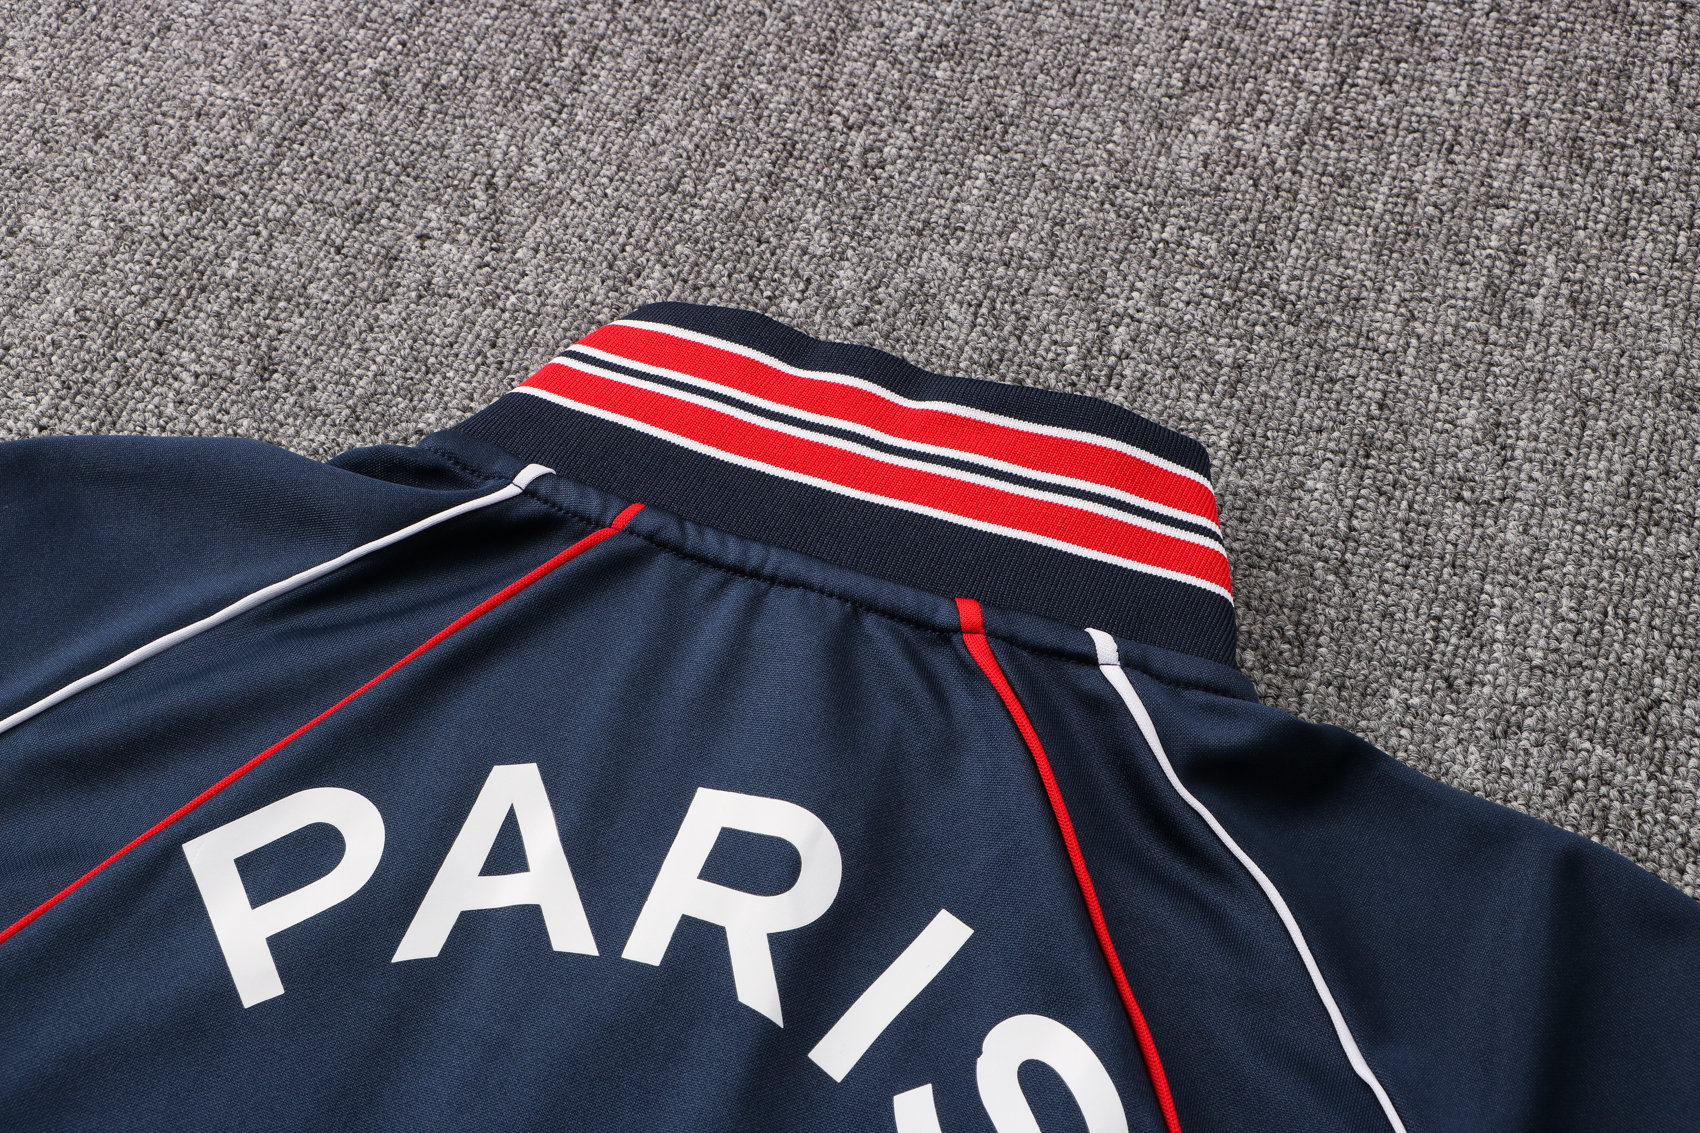 PSG x Jordan Soccer Training Suit Jacket + Pants Navy II Mens 2021/22